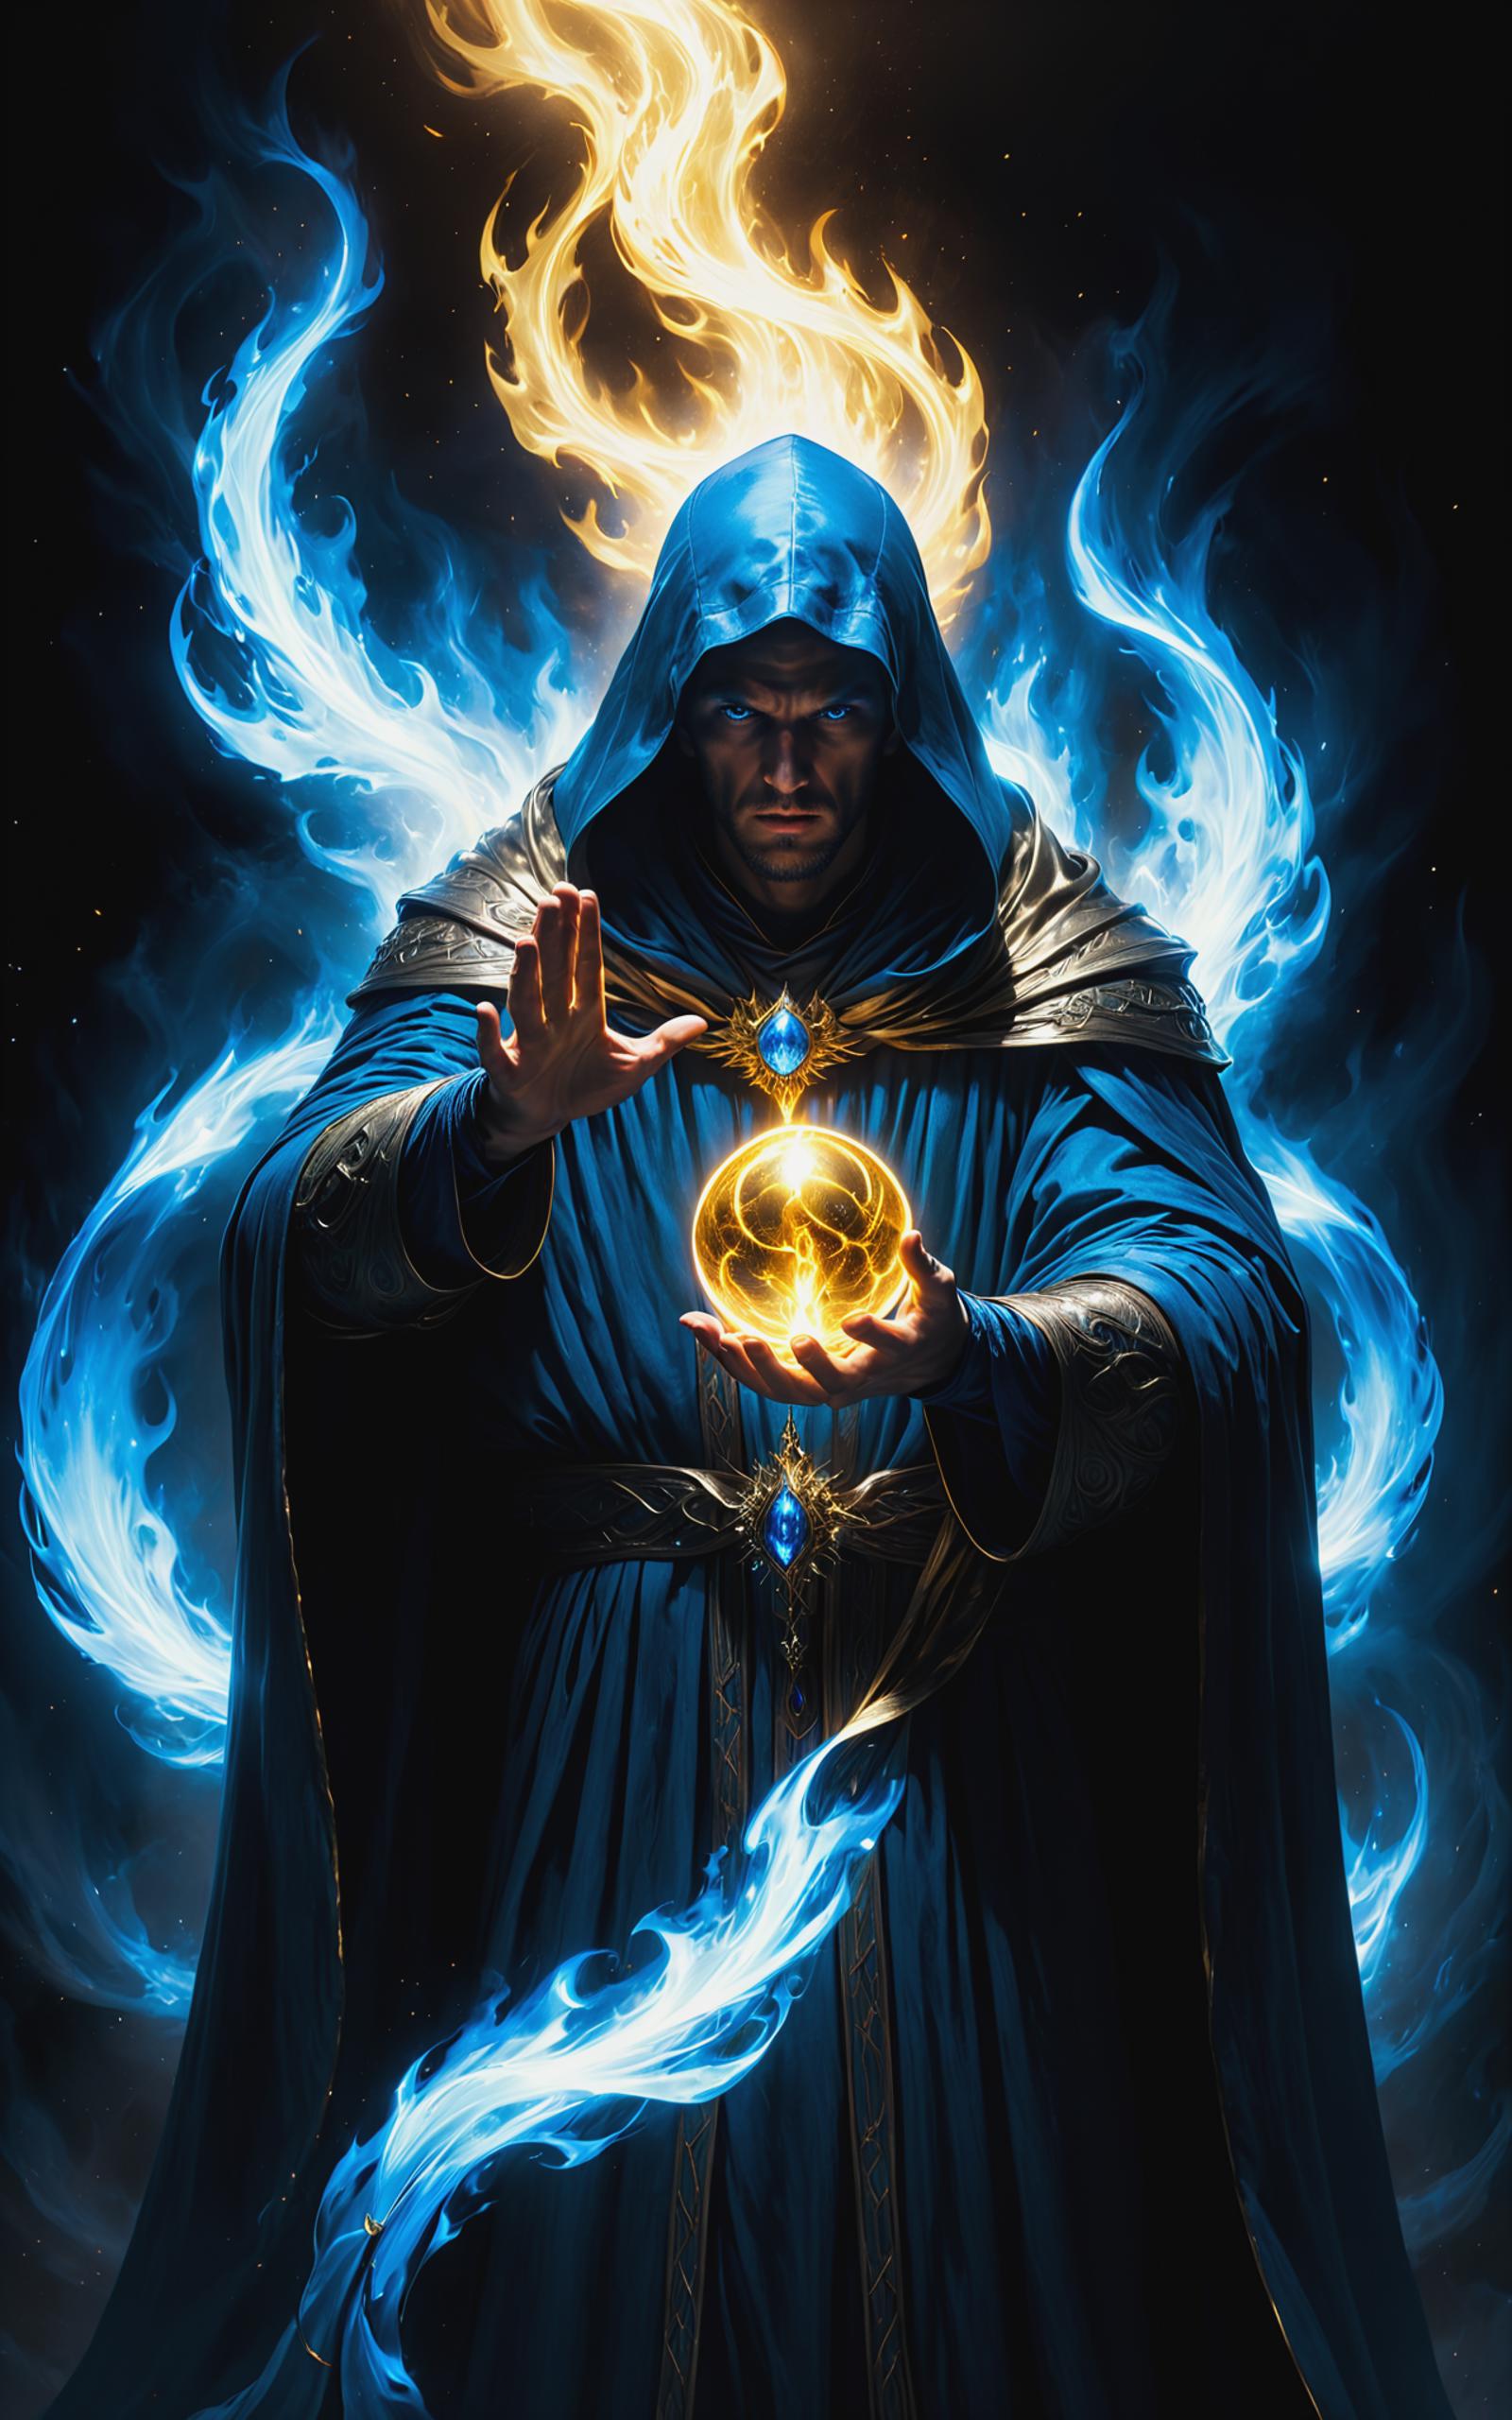 A man in a blue cloak holding a golden orb.